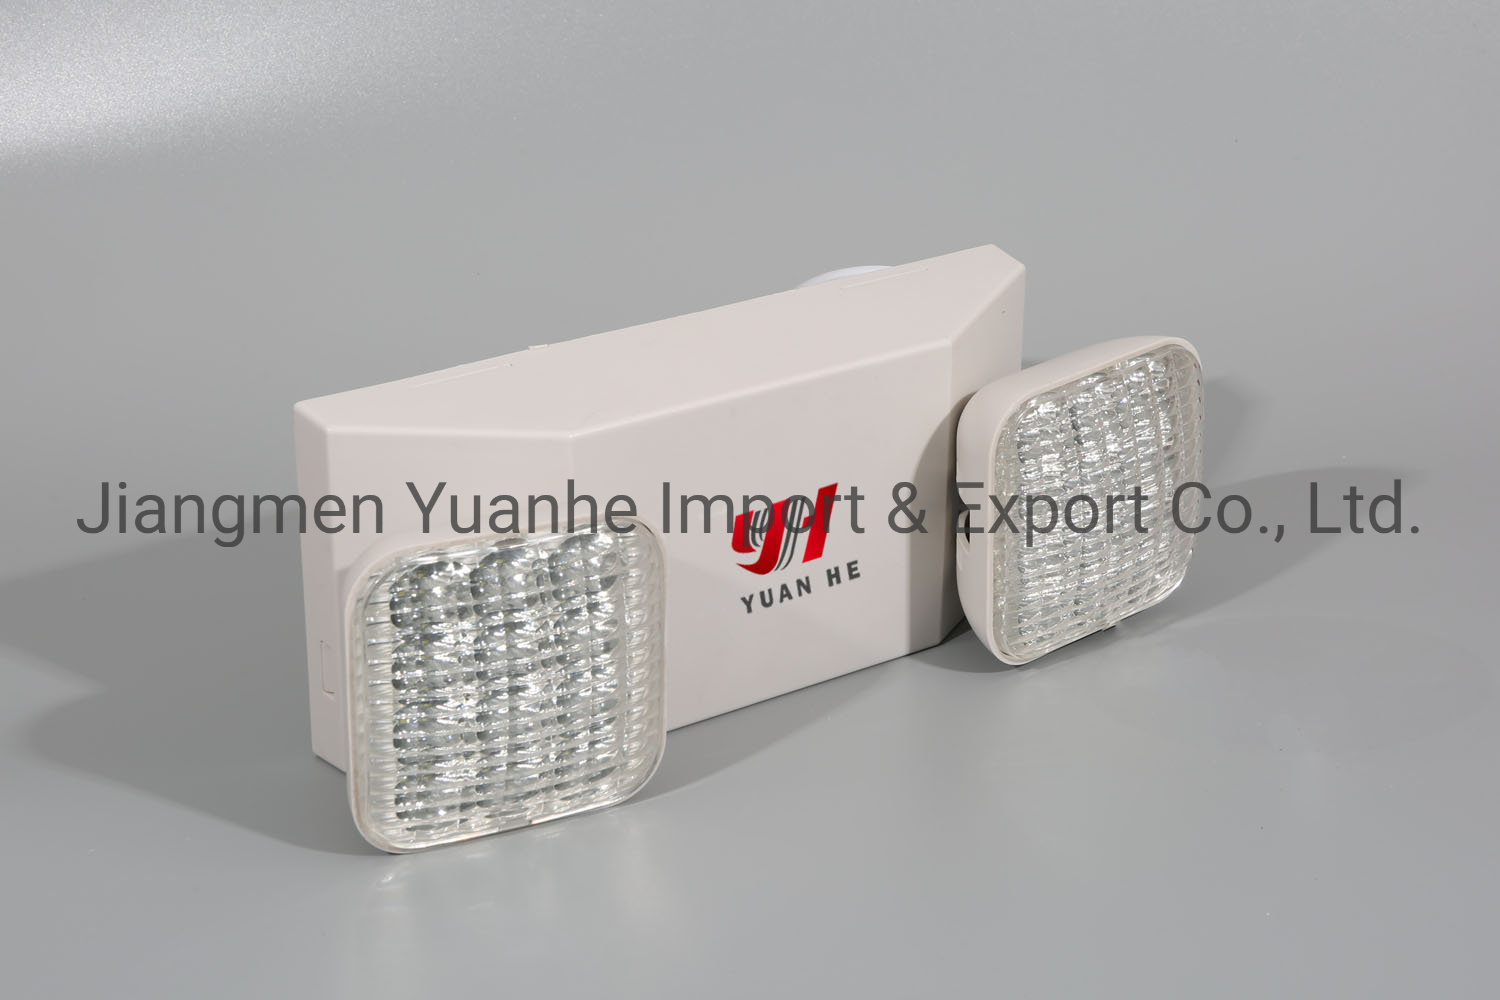 Hot Selling Dual Head / Twin Spot LED Emergency Light